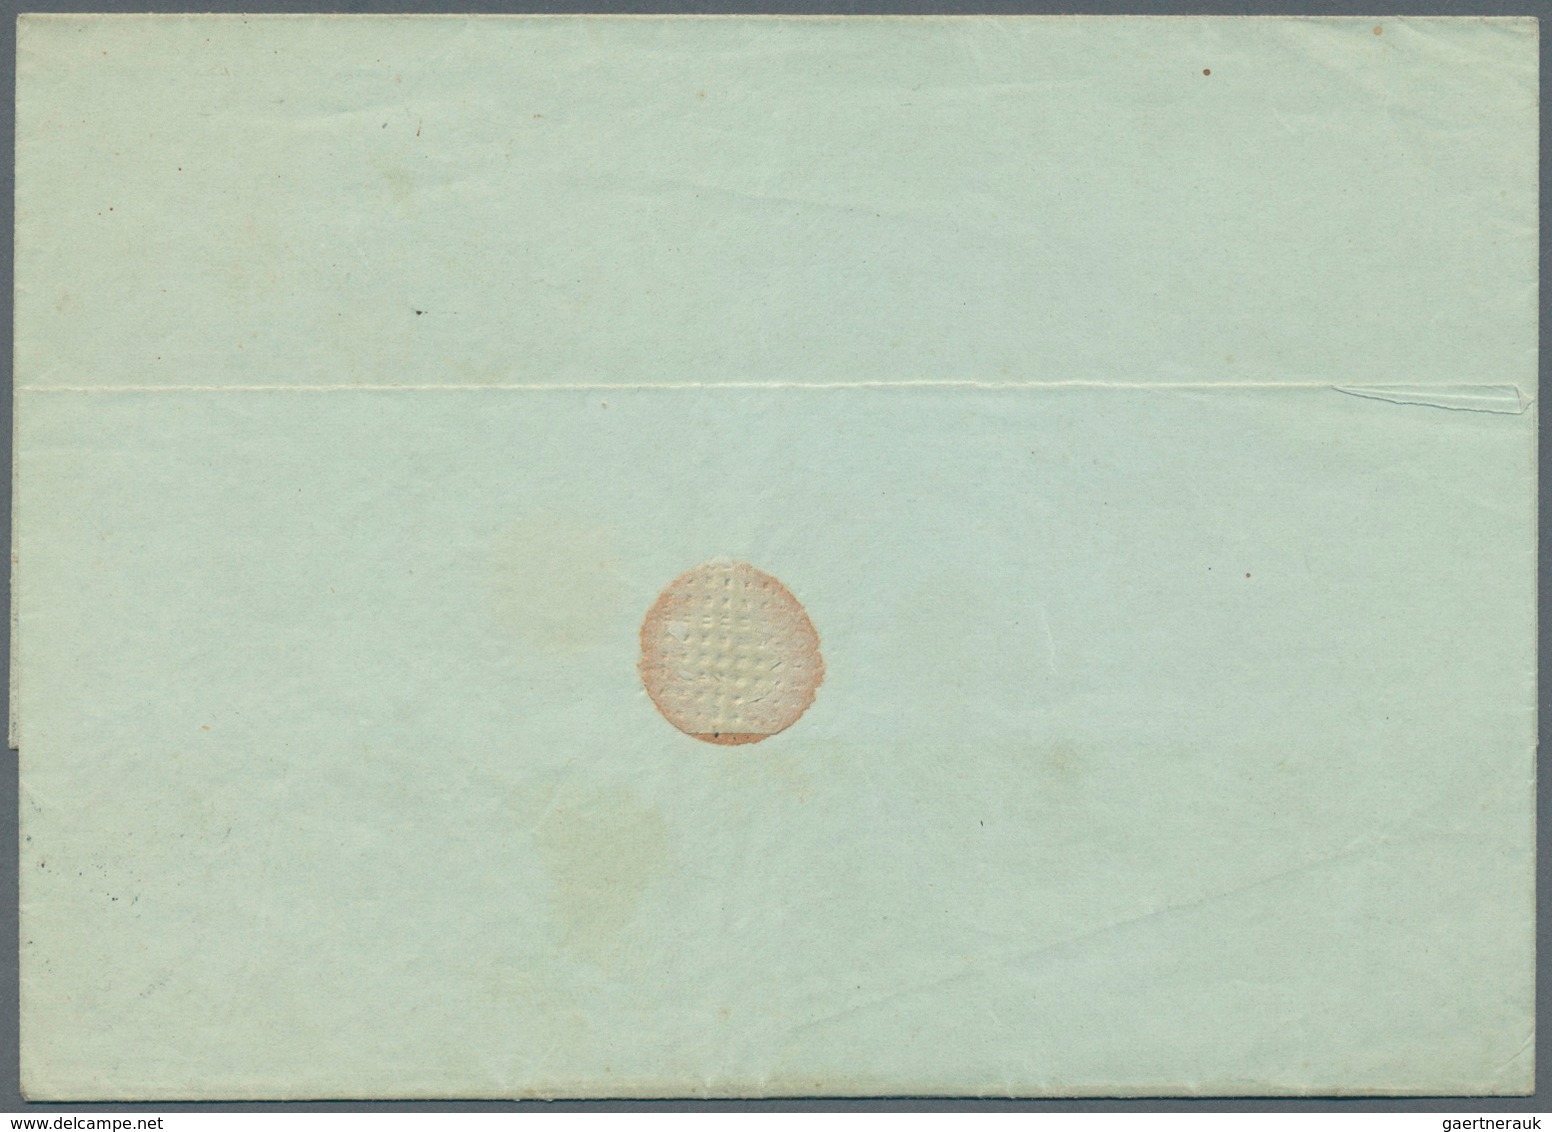 11303 Ägypten - Vorphilatelie: 1849 (July 18): Cover To Malta Prepaid '5' Pence In Red Manuscript, Endorse - Vorphilatelie